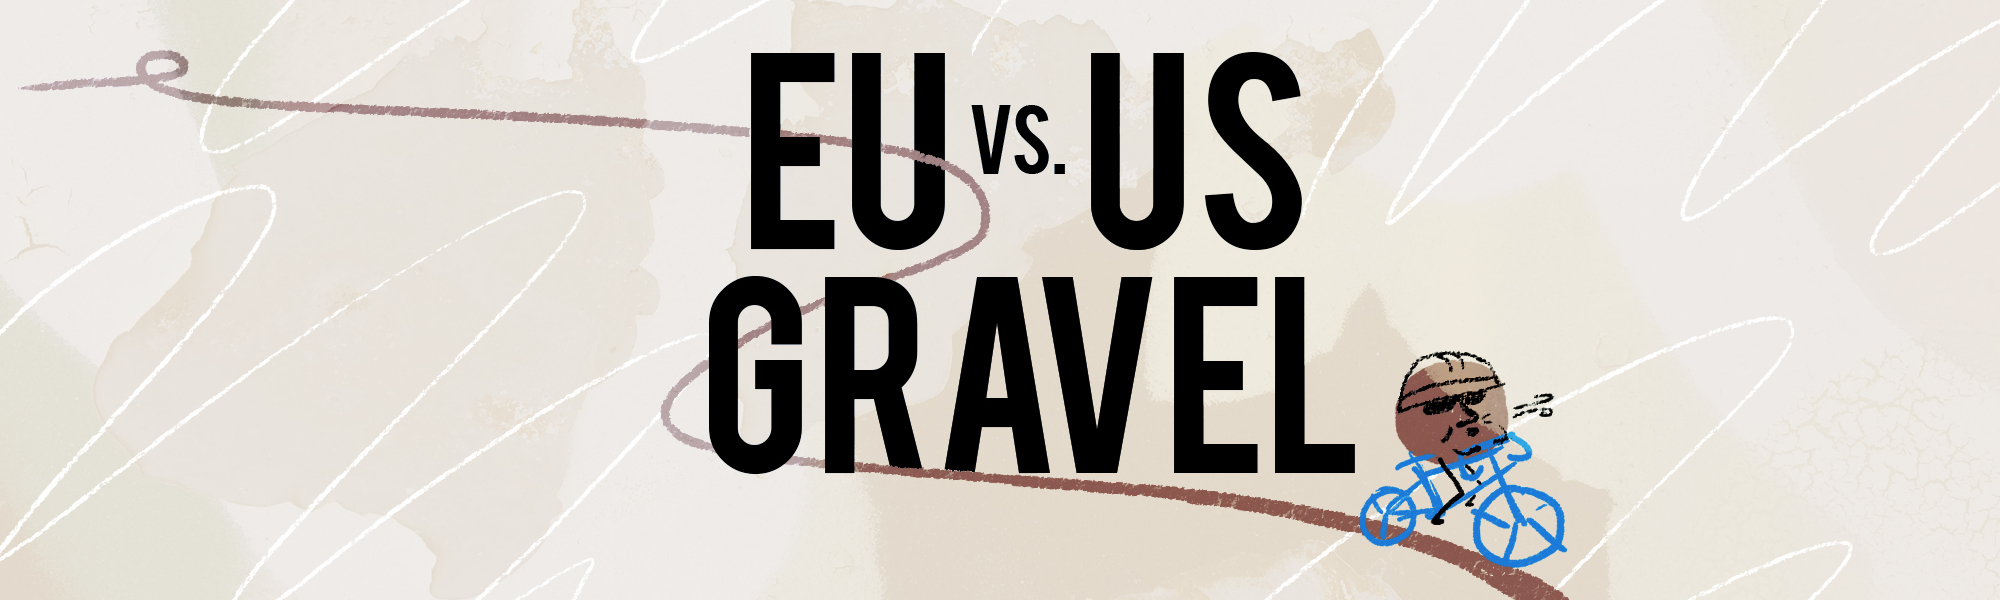 Europa vs USA w gravelu